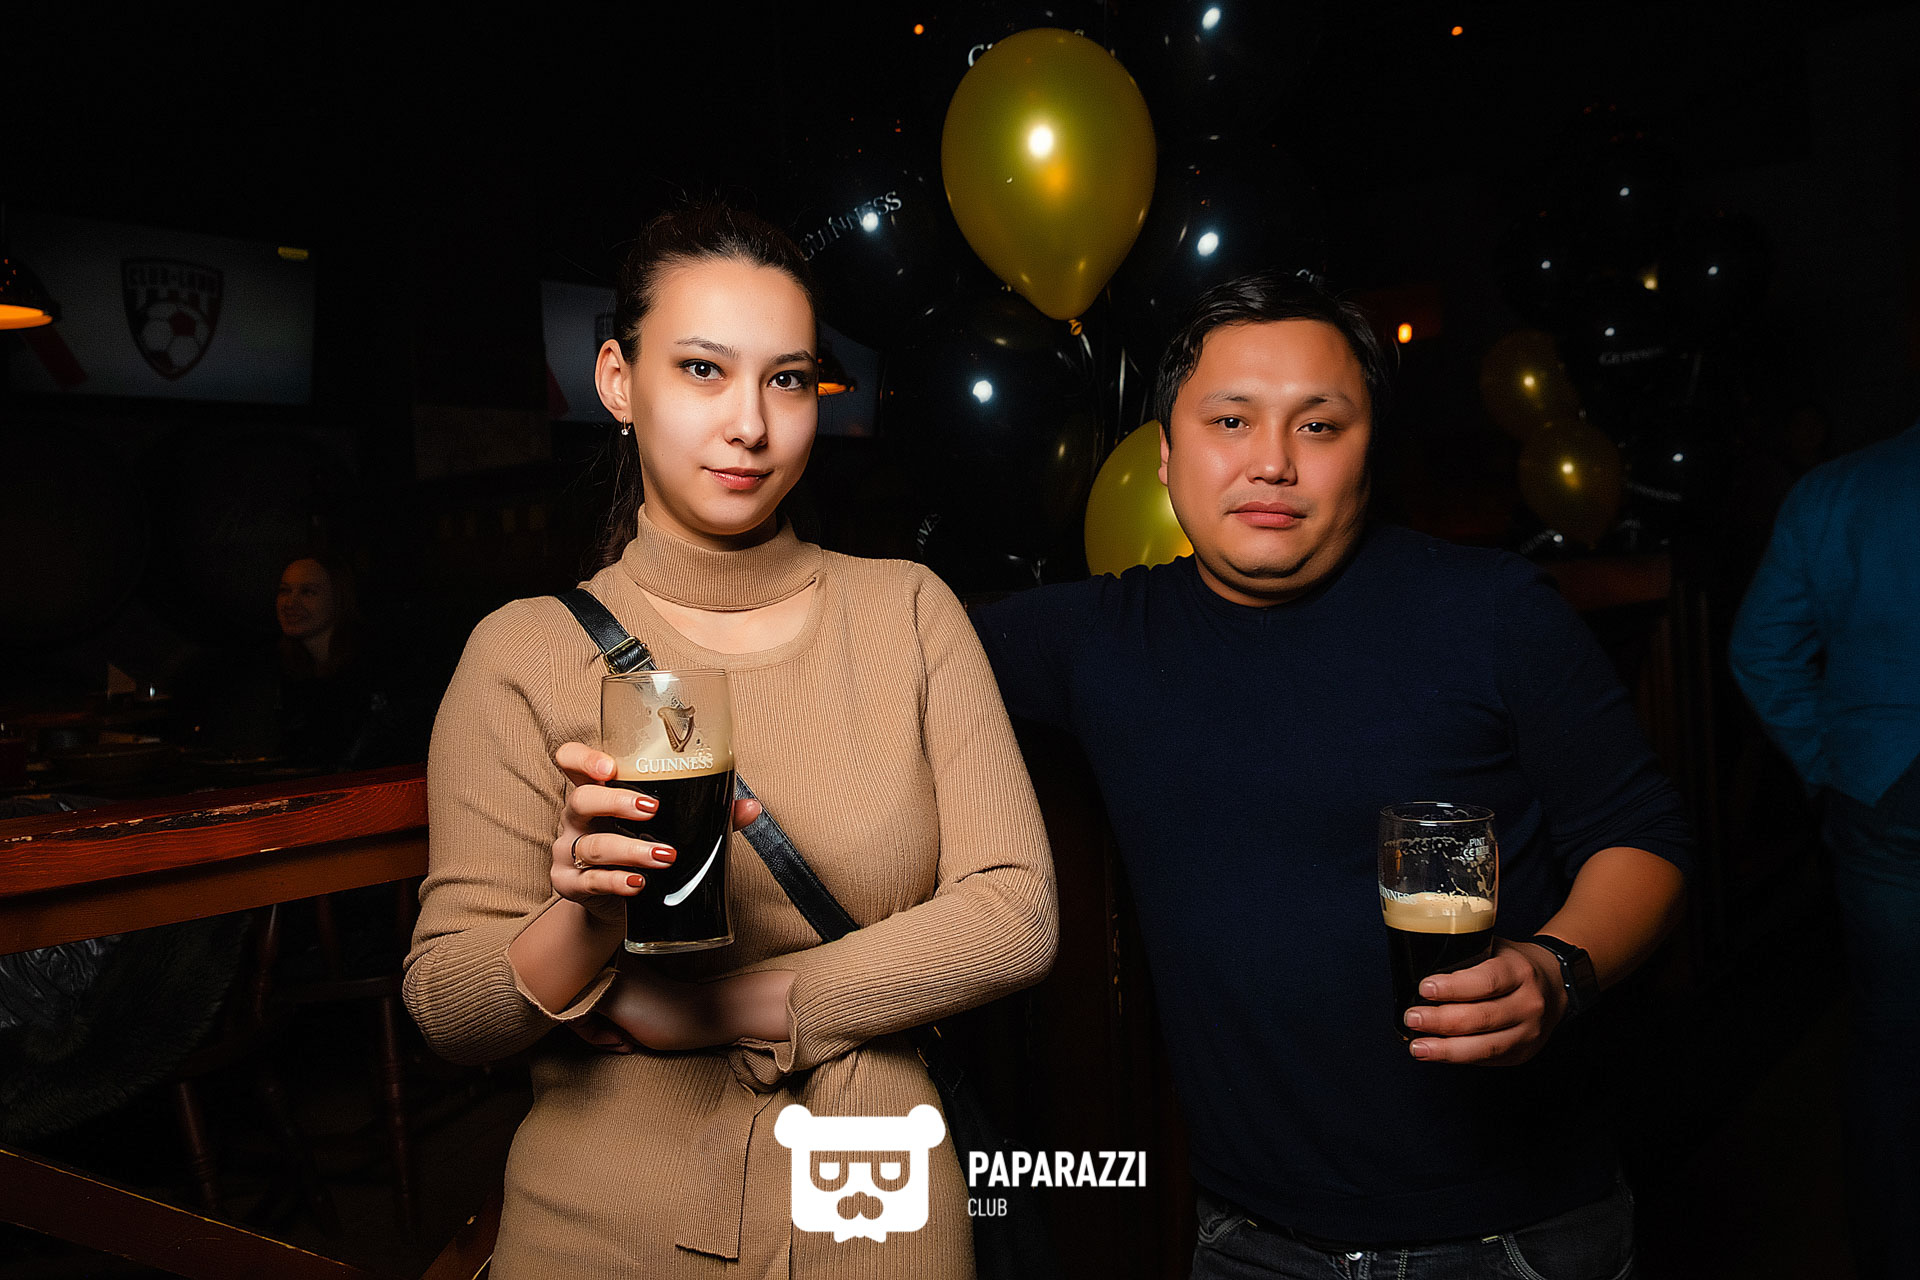 Guinness Club 2019 Final «Yard House pub»